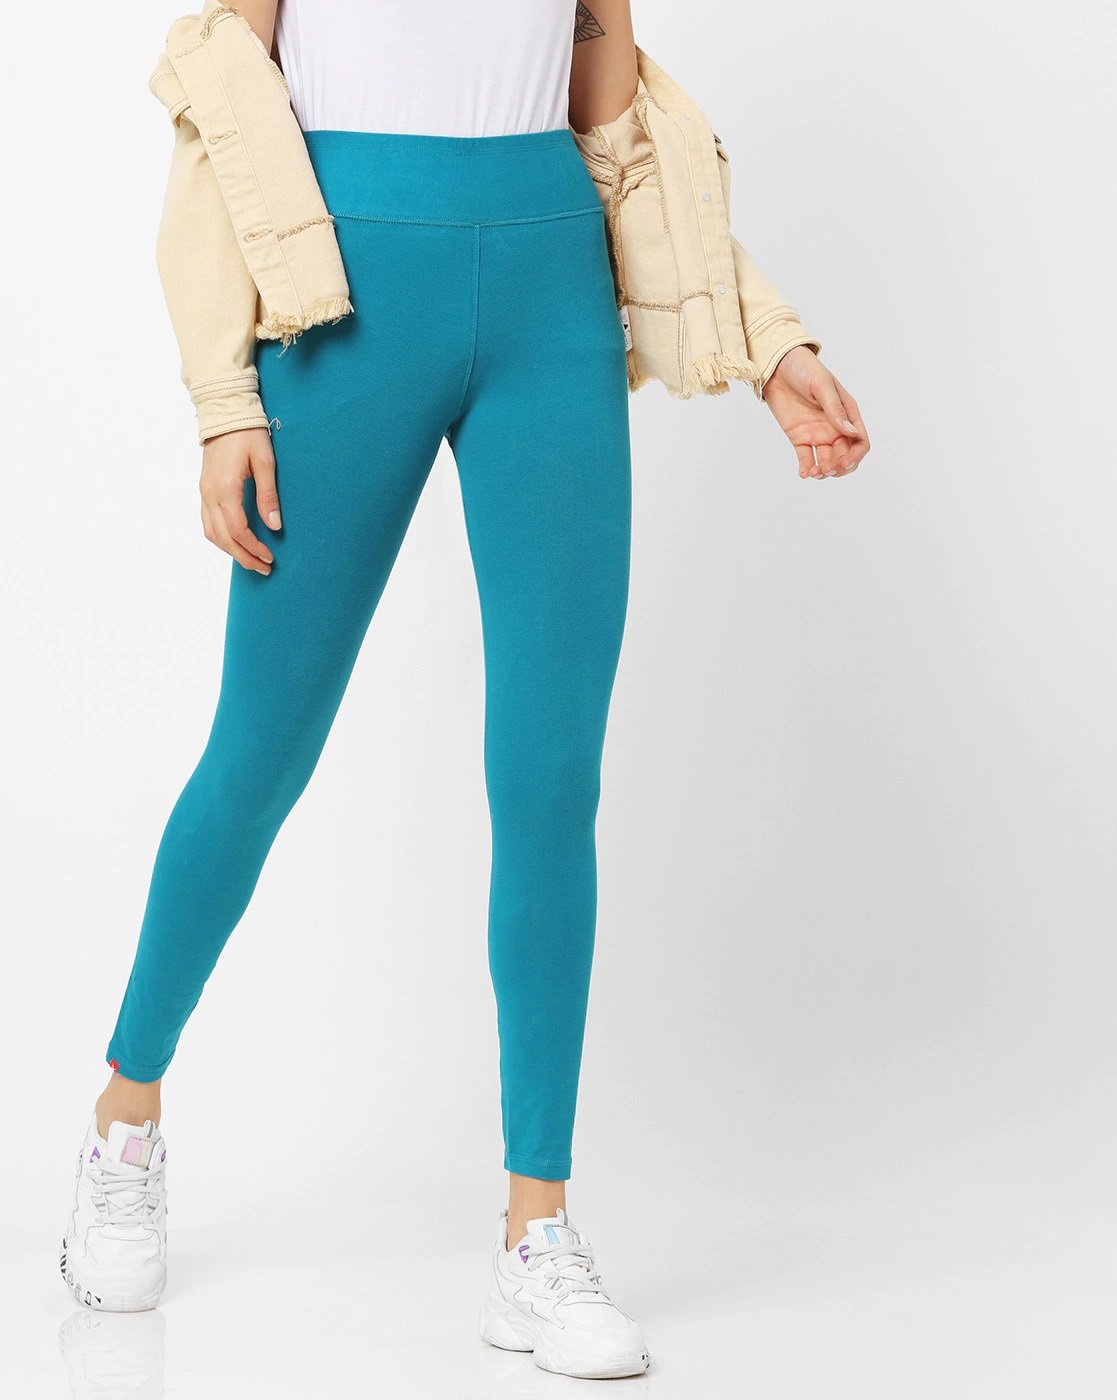 Women's Skimmer Cotton Stretch Shapewear Legging Teal Blue – Stilento